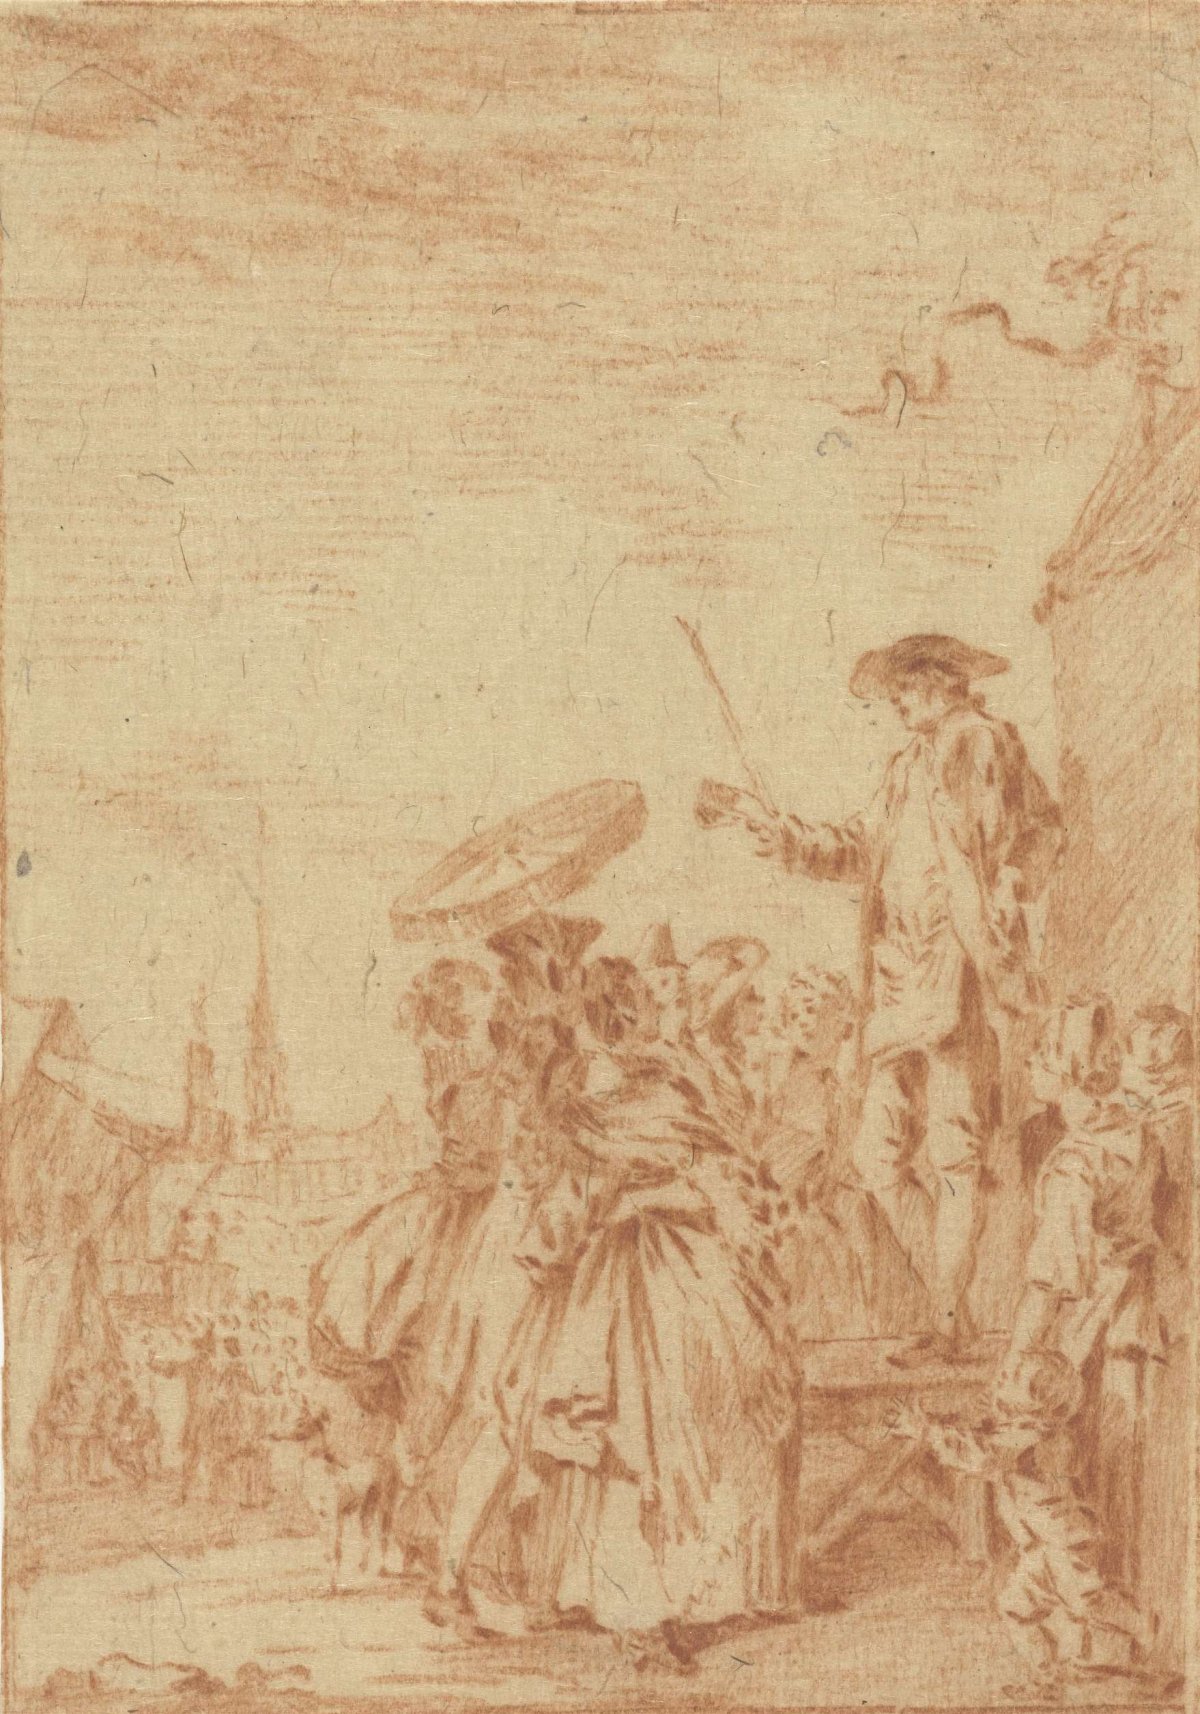 Market vendor with elegant crowd, Jacob Perkois, 1766 - 1804